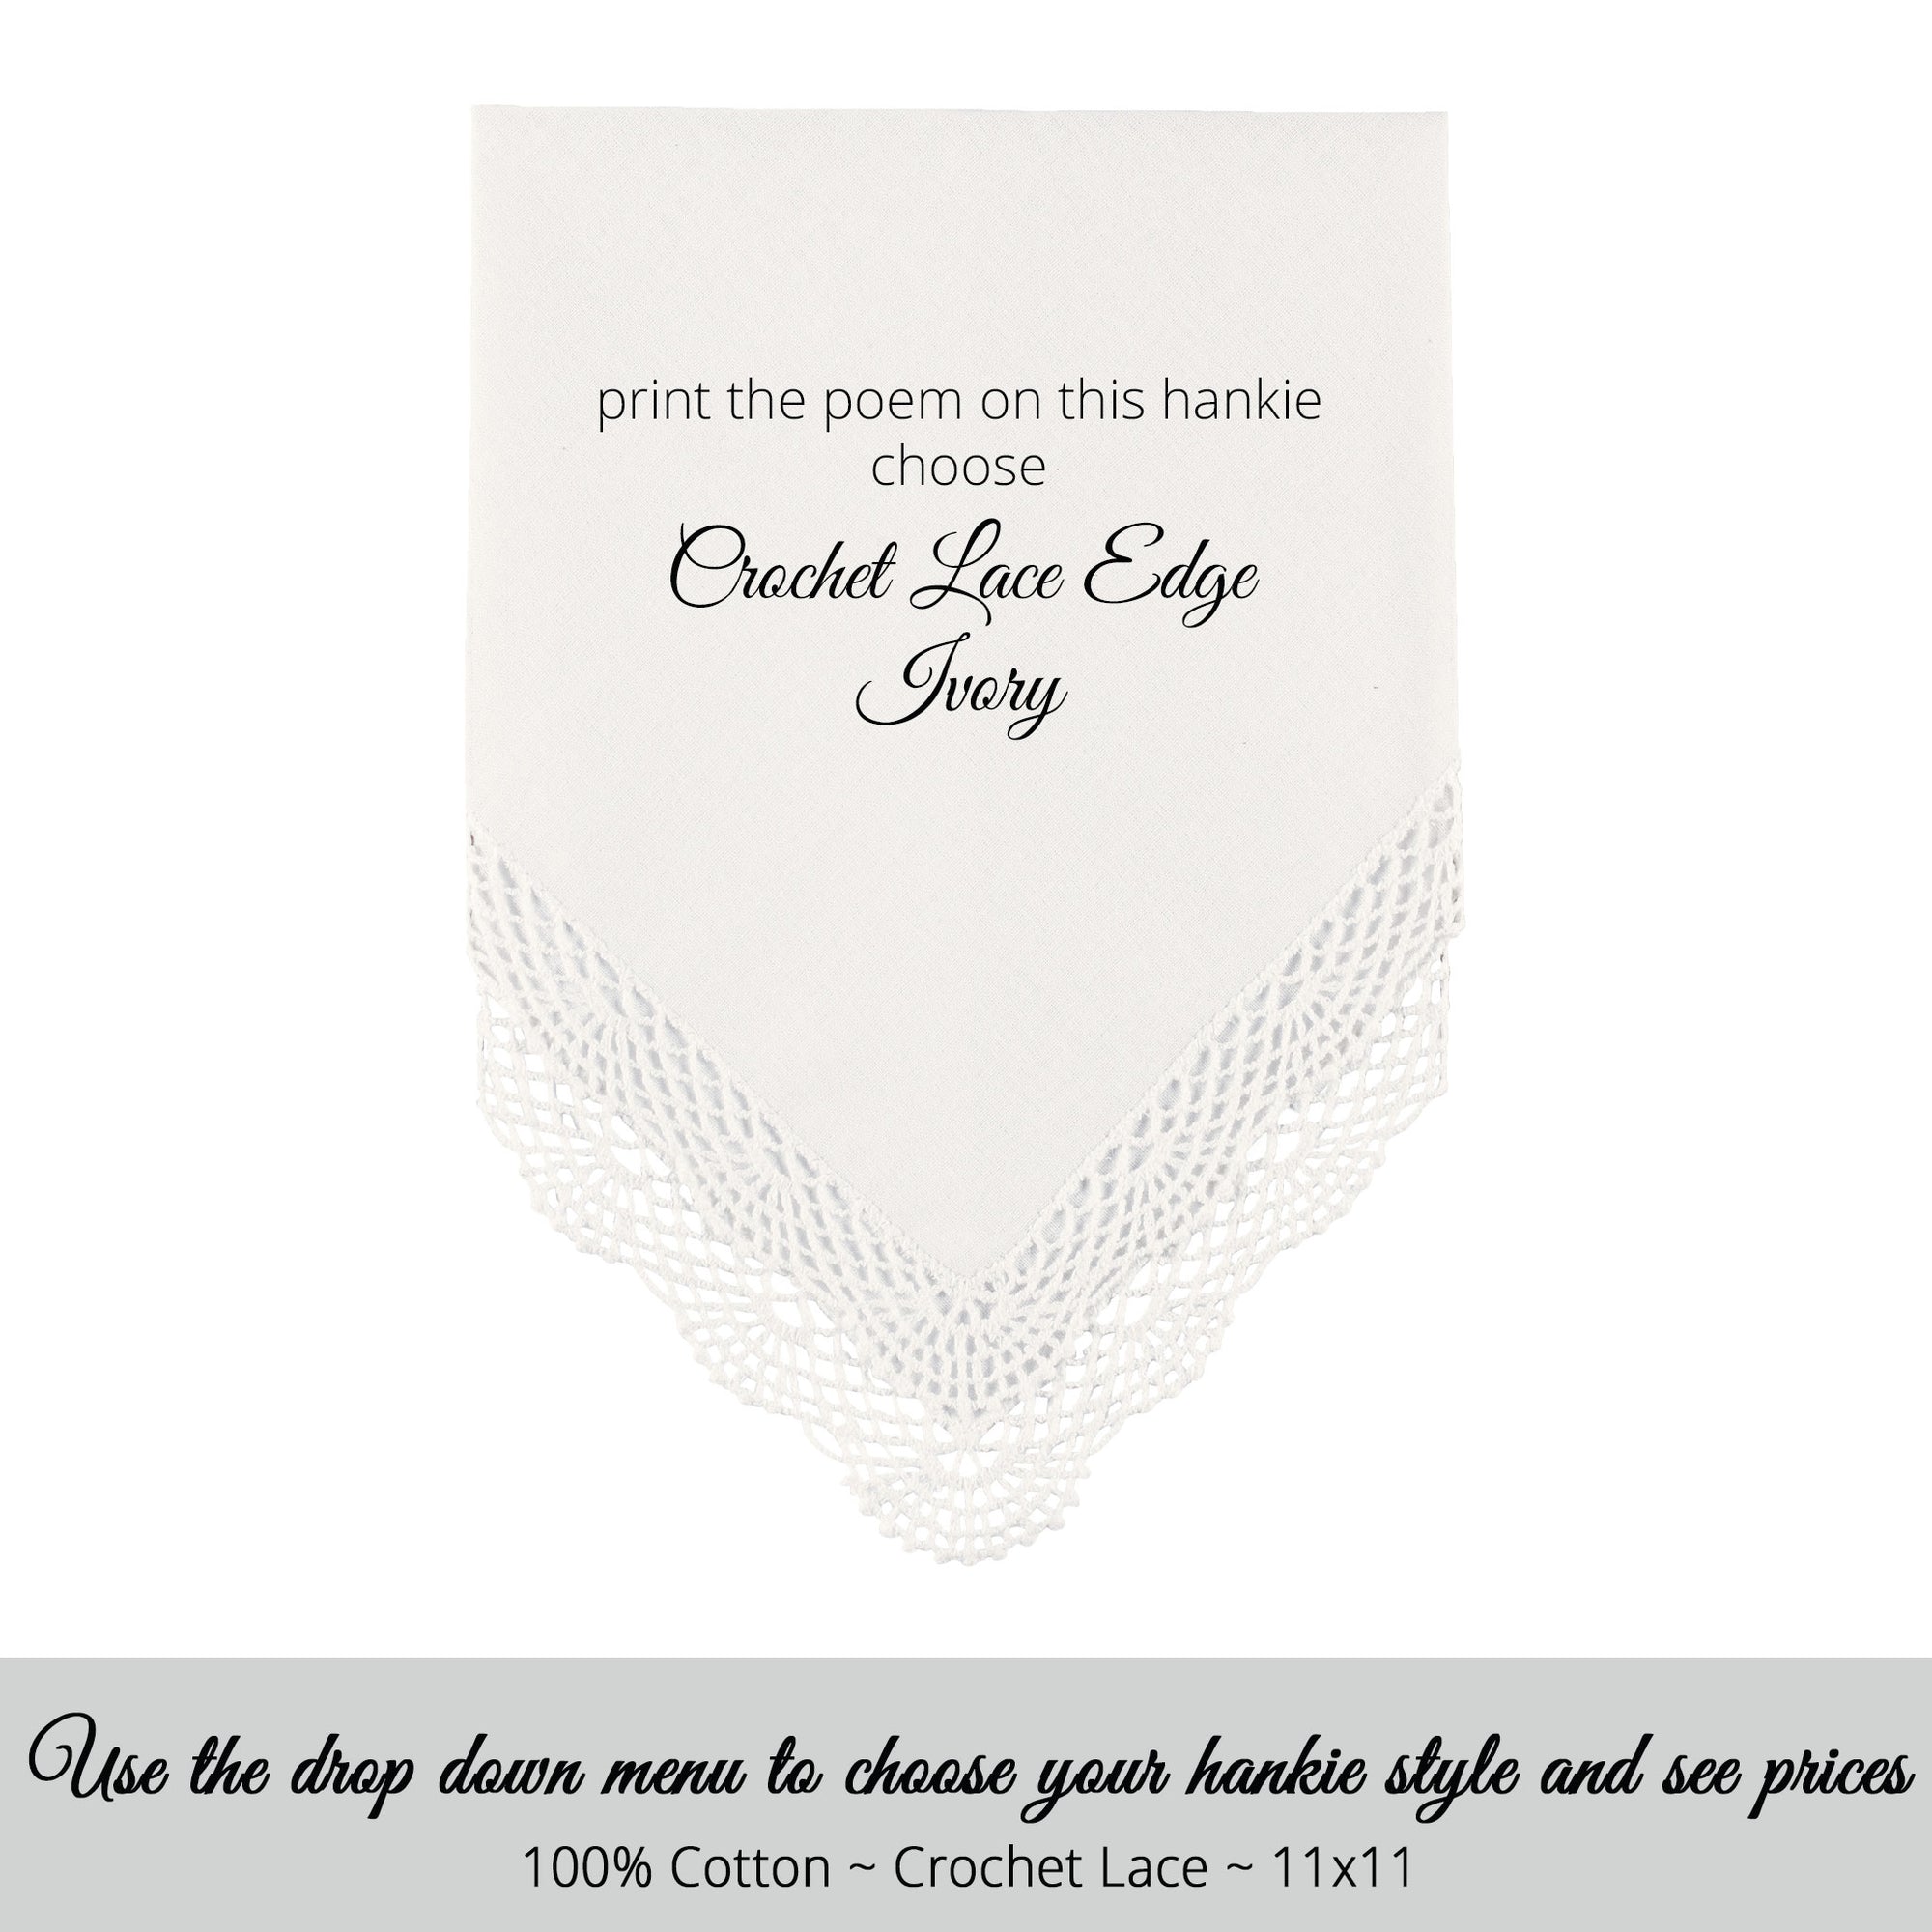 Wedding handkerchief ivory with crochet lace edge for a custom printed hankie